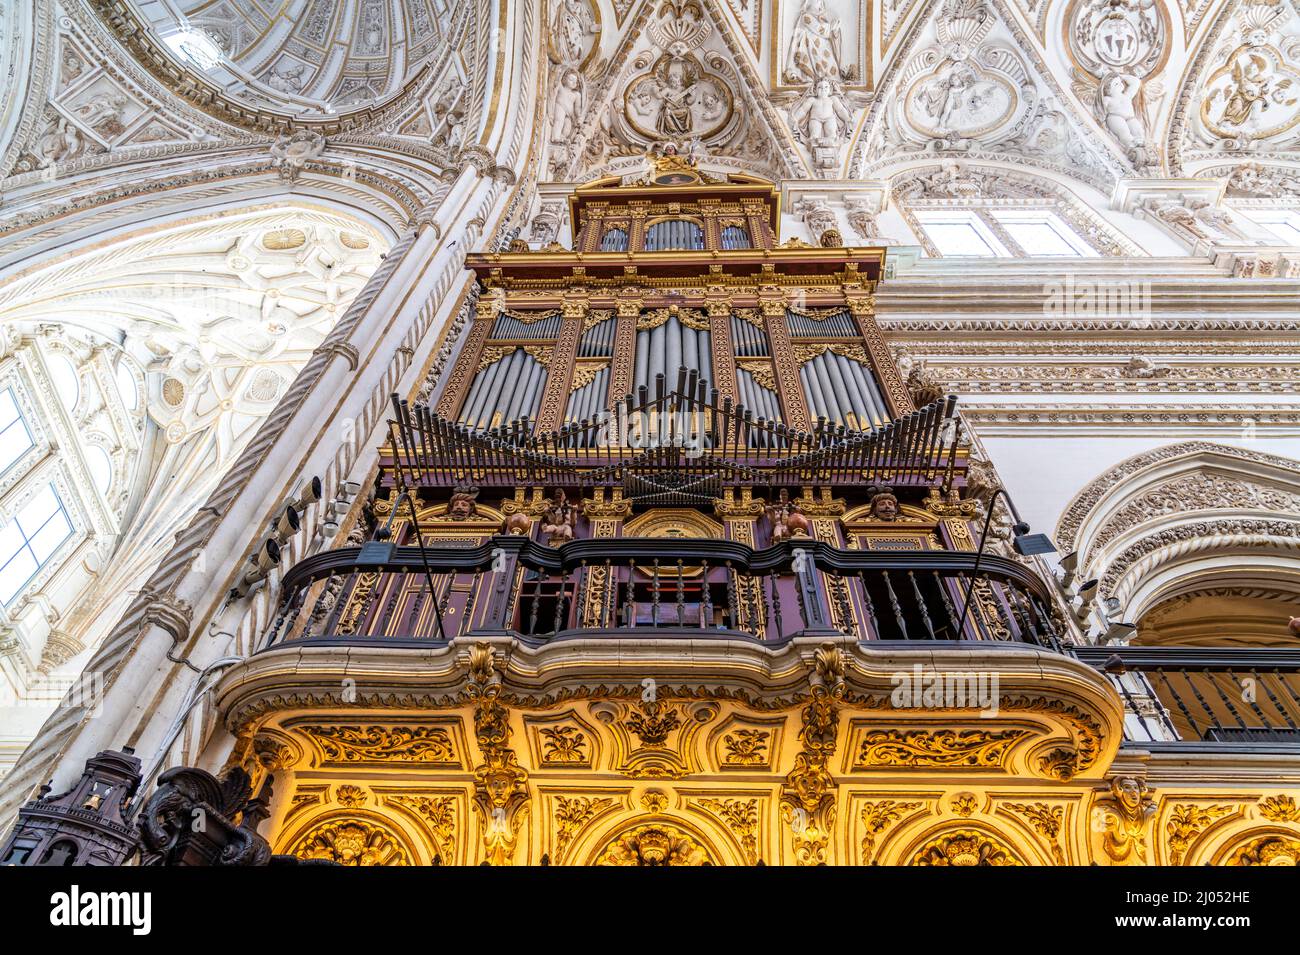 Orgel im Innenraum der Kathedrale - Mezquita - Catedral de Córdoba in Cordoba, Andalusien, Spanien | Orgel der Kathedrale - Mezquita - Moschee–Katze Stockfoto